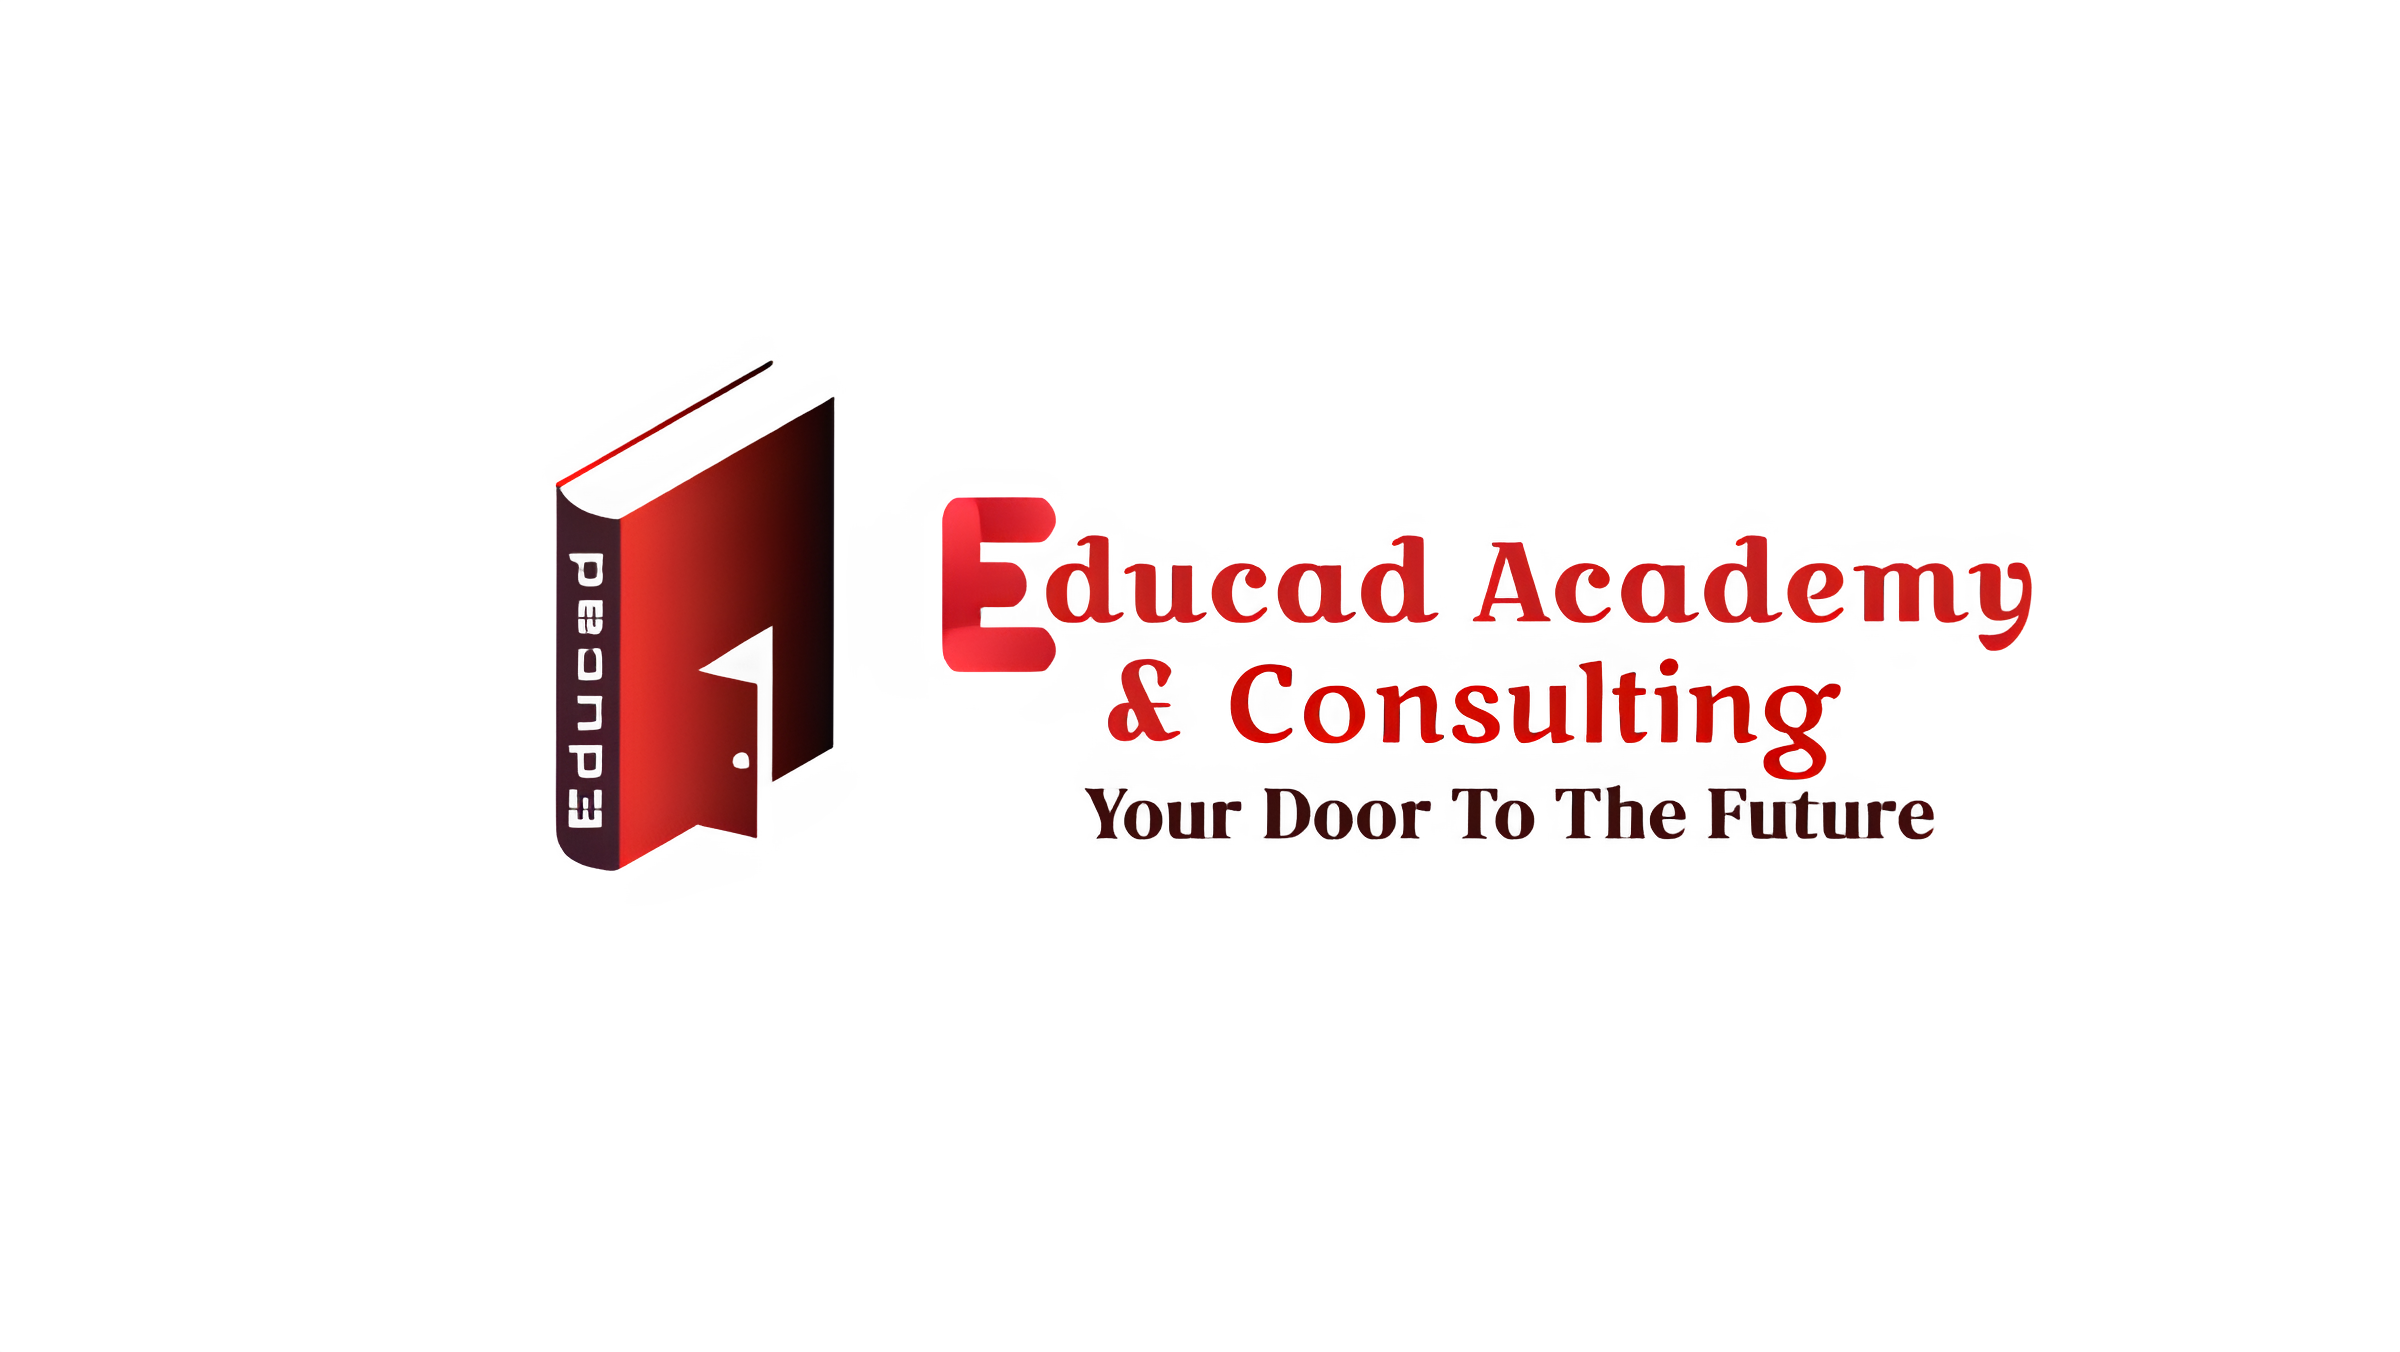 Educad Academy